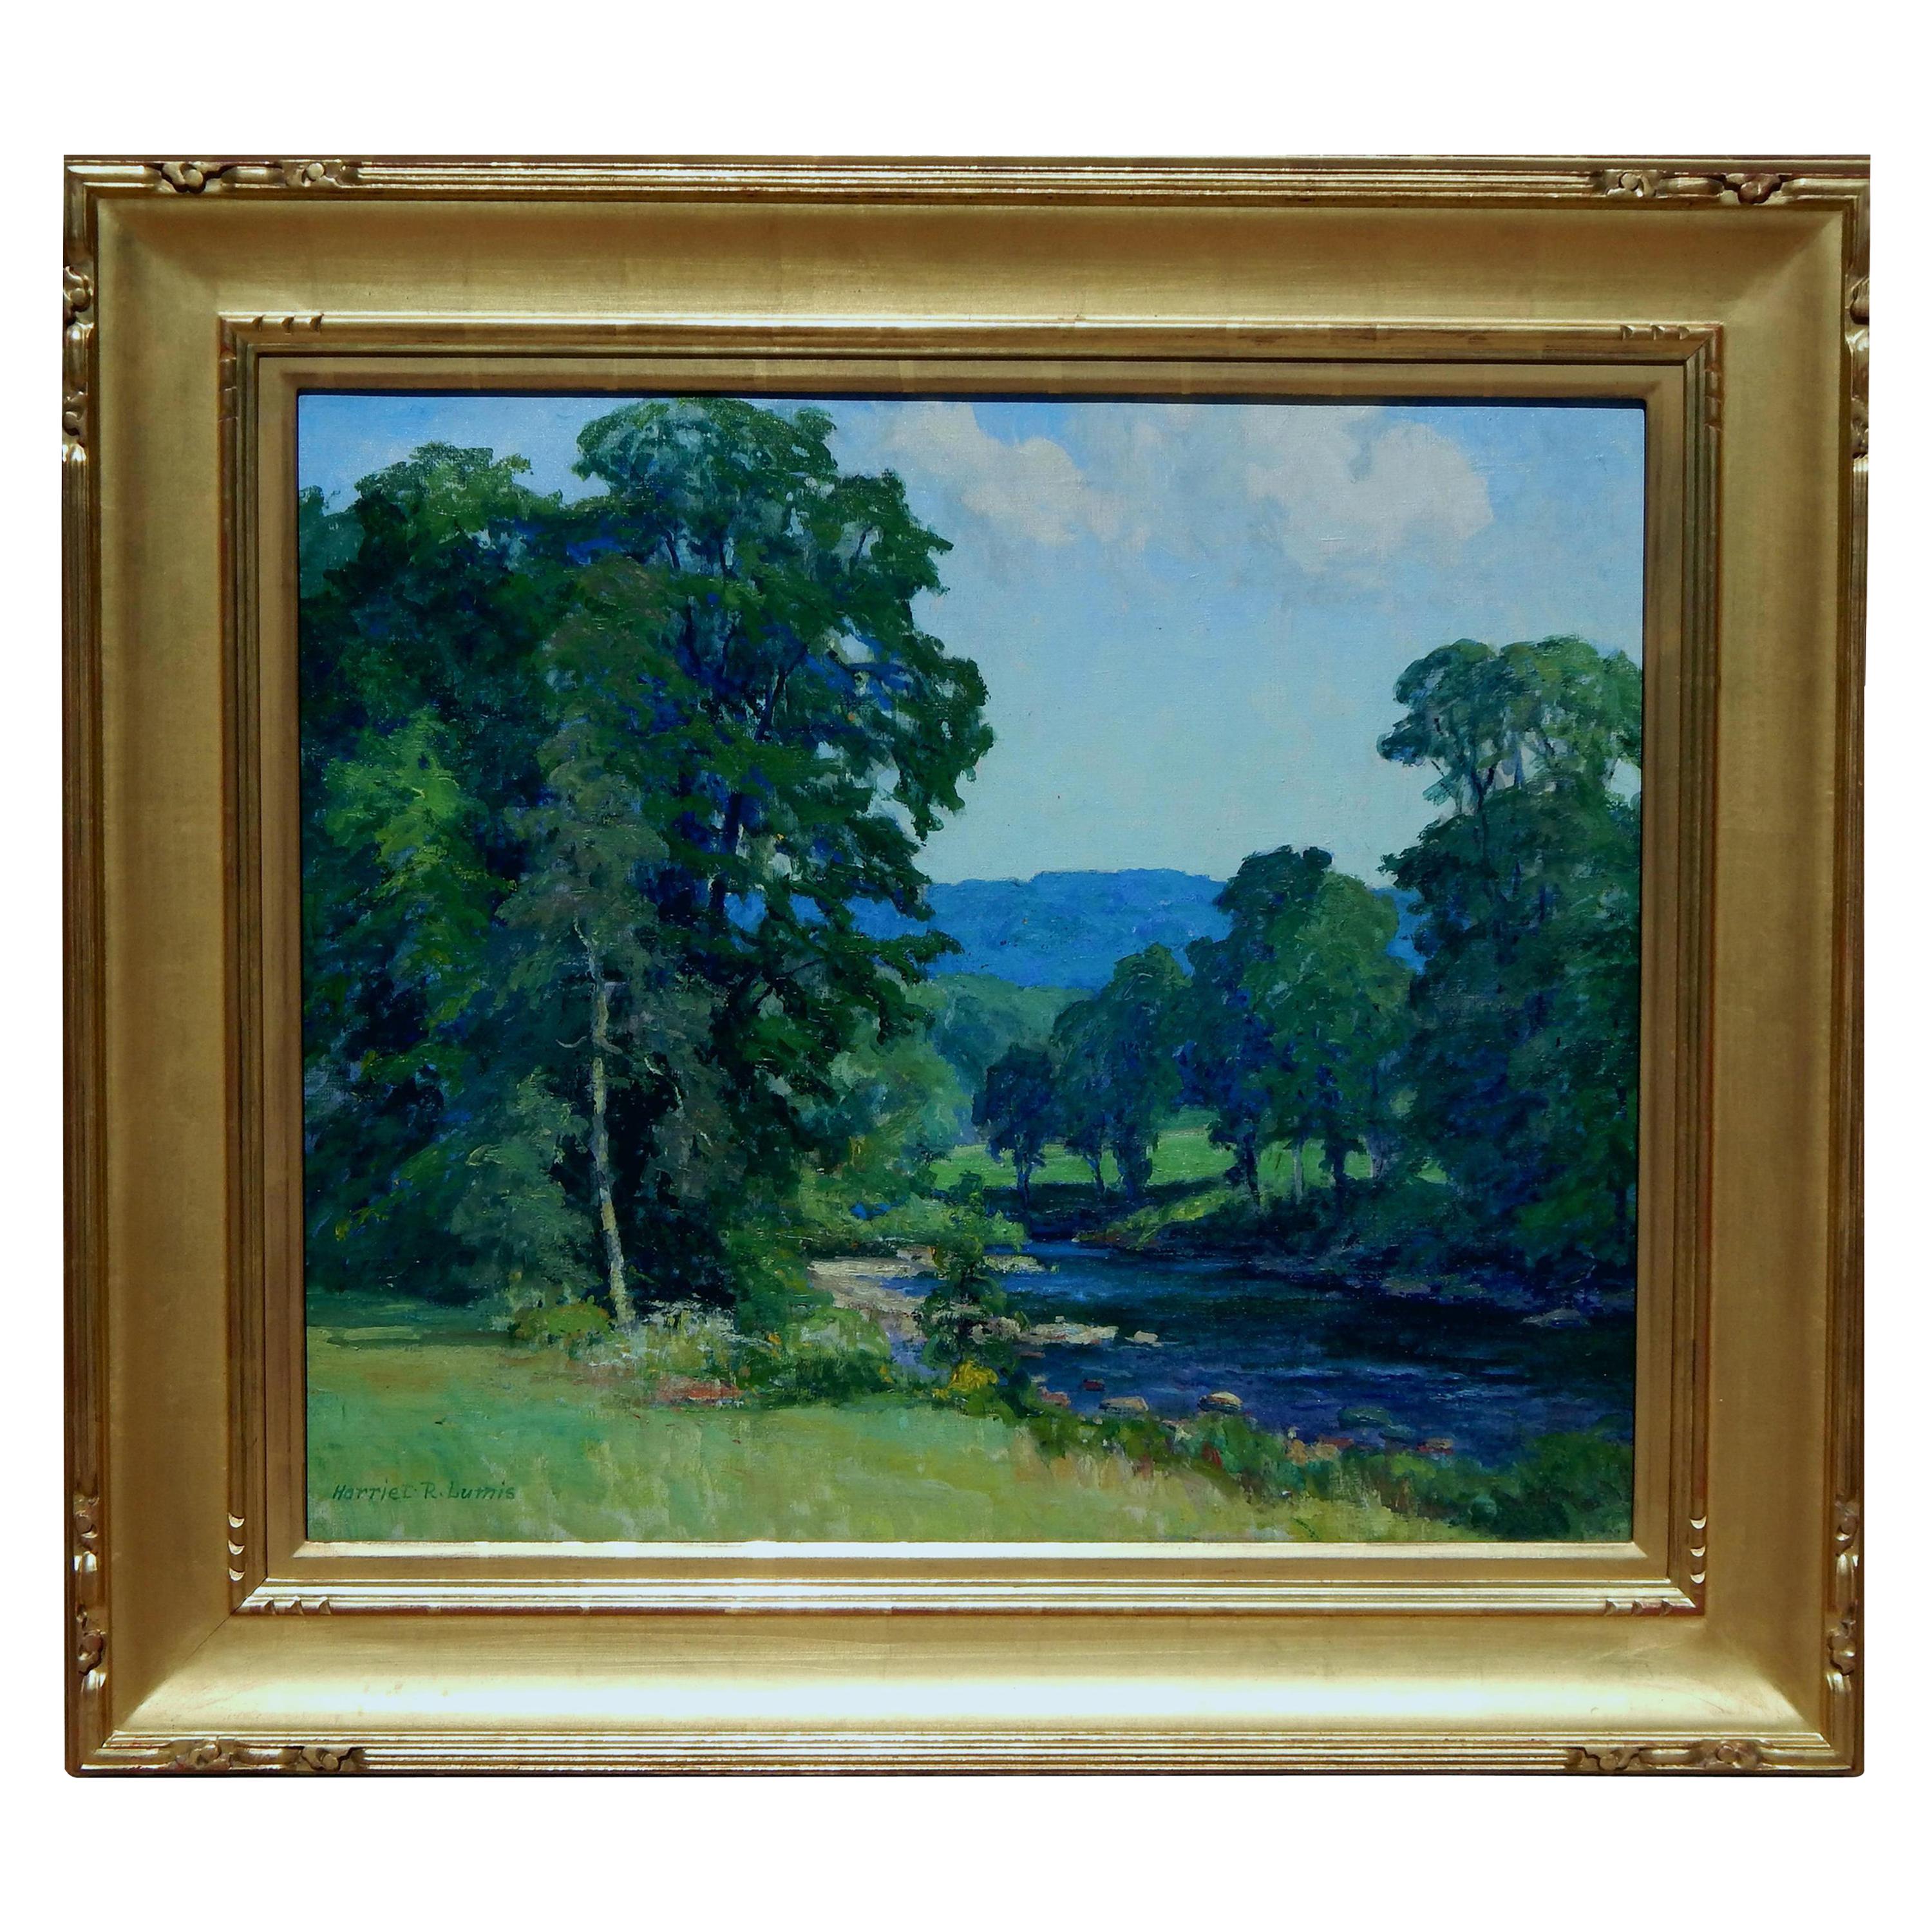 Harriet Lumis Connecticut Impressionist Woman Painter, "River at Cummington"